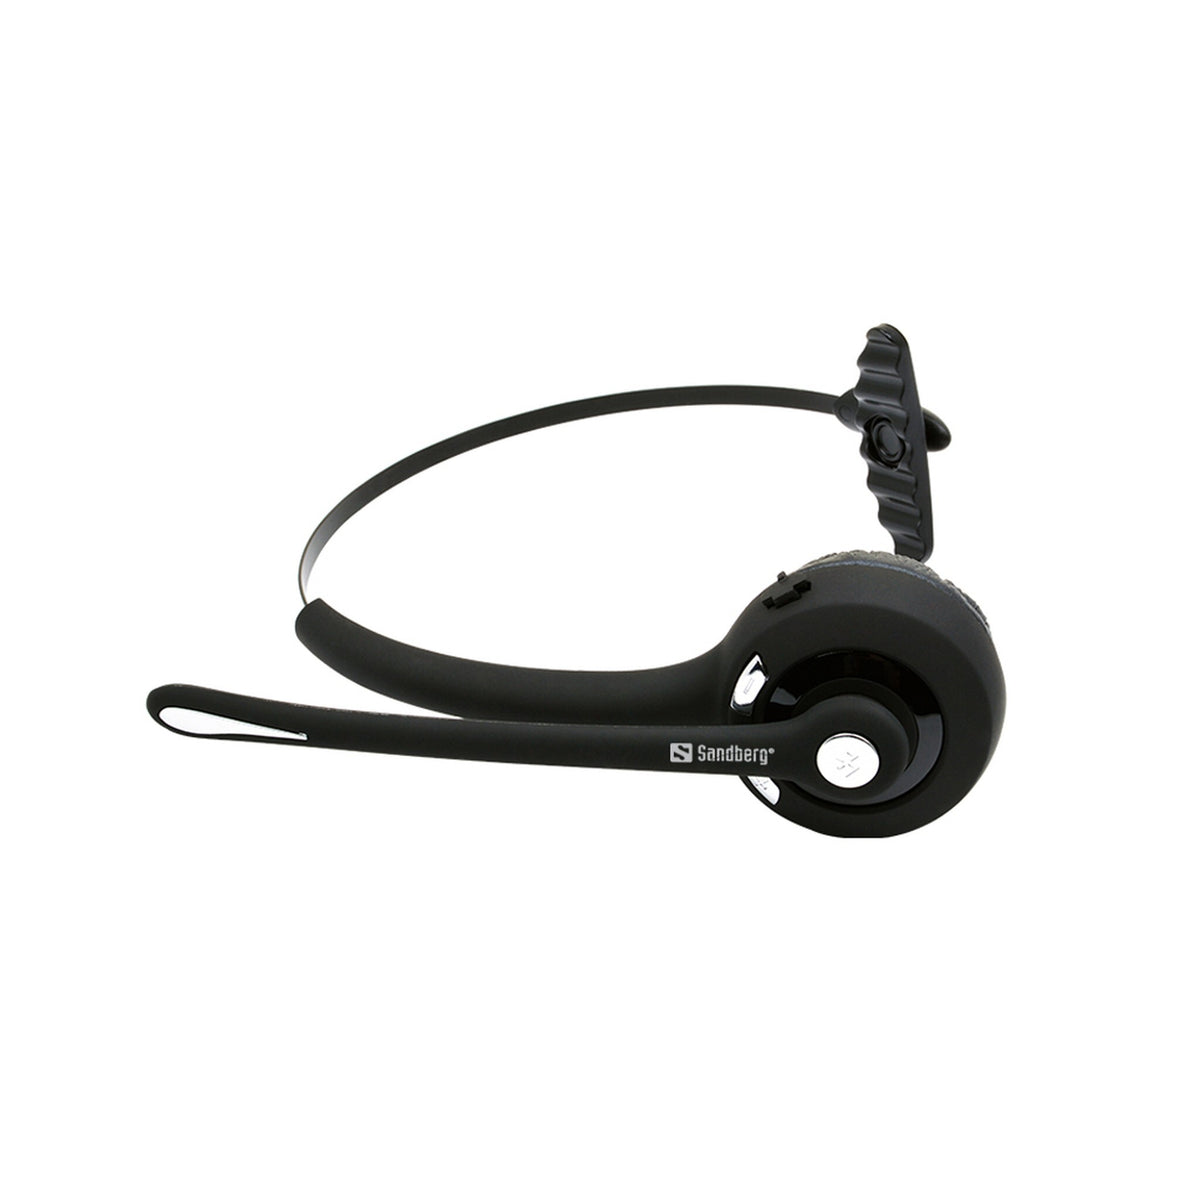 Bezdrátové sluchátko s mikrofonem Sandberg (126-23)